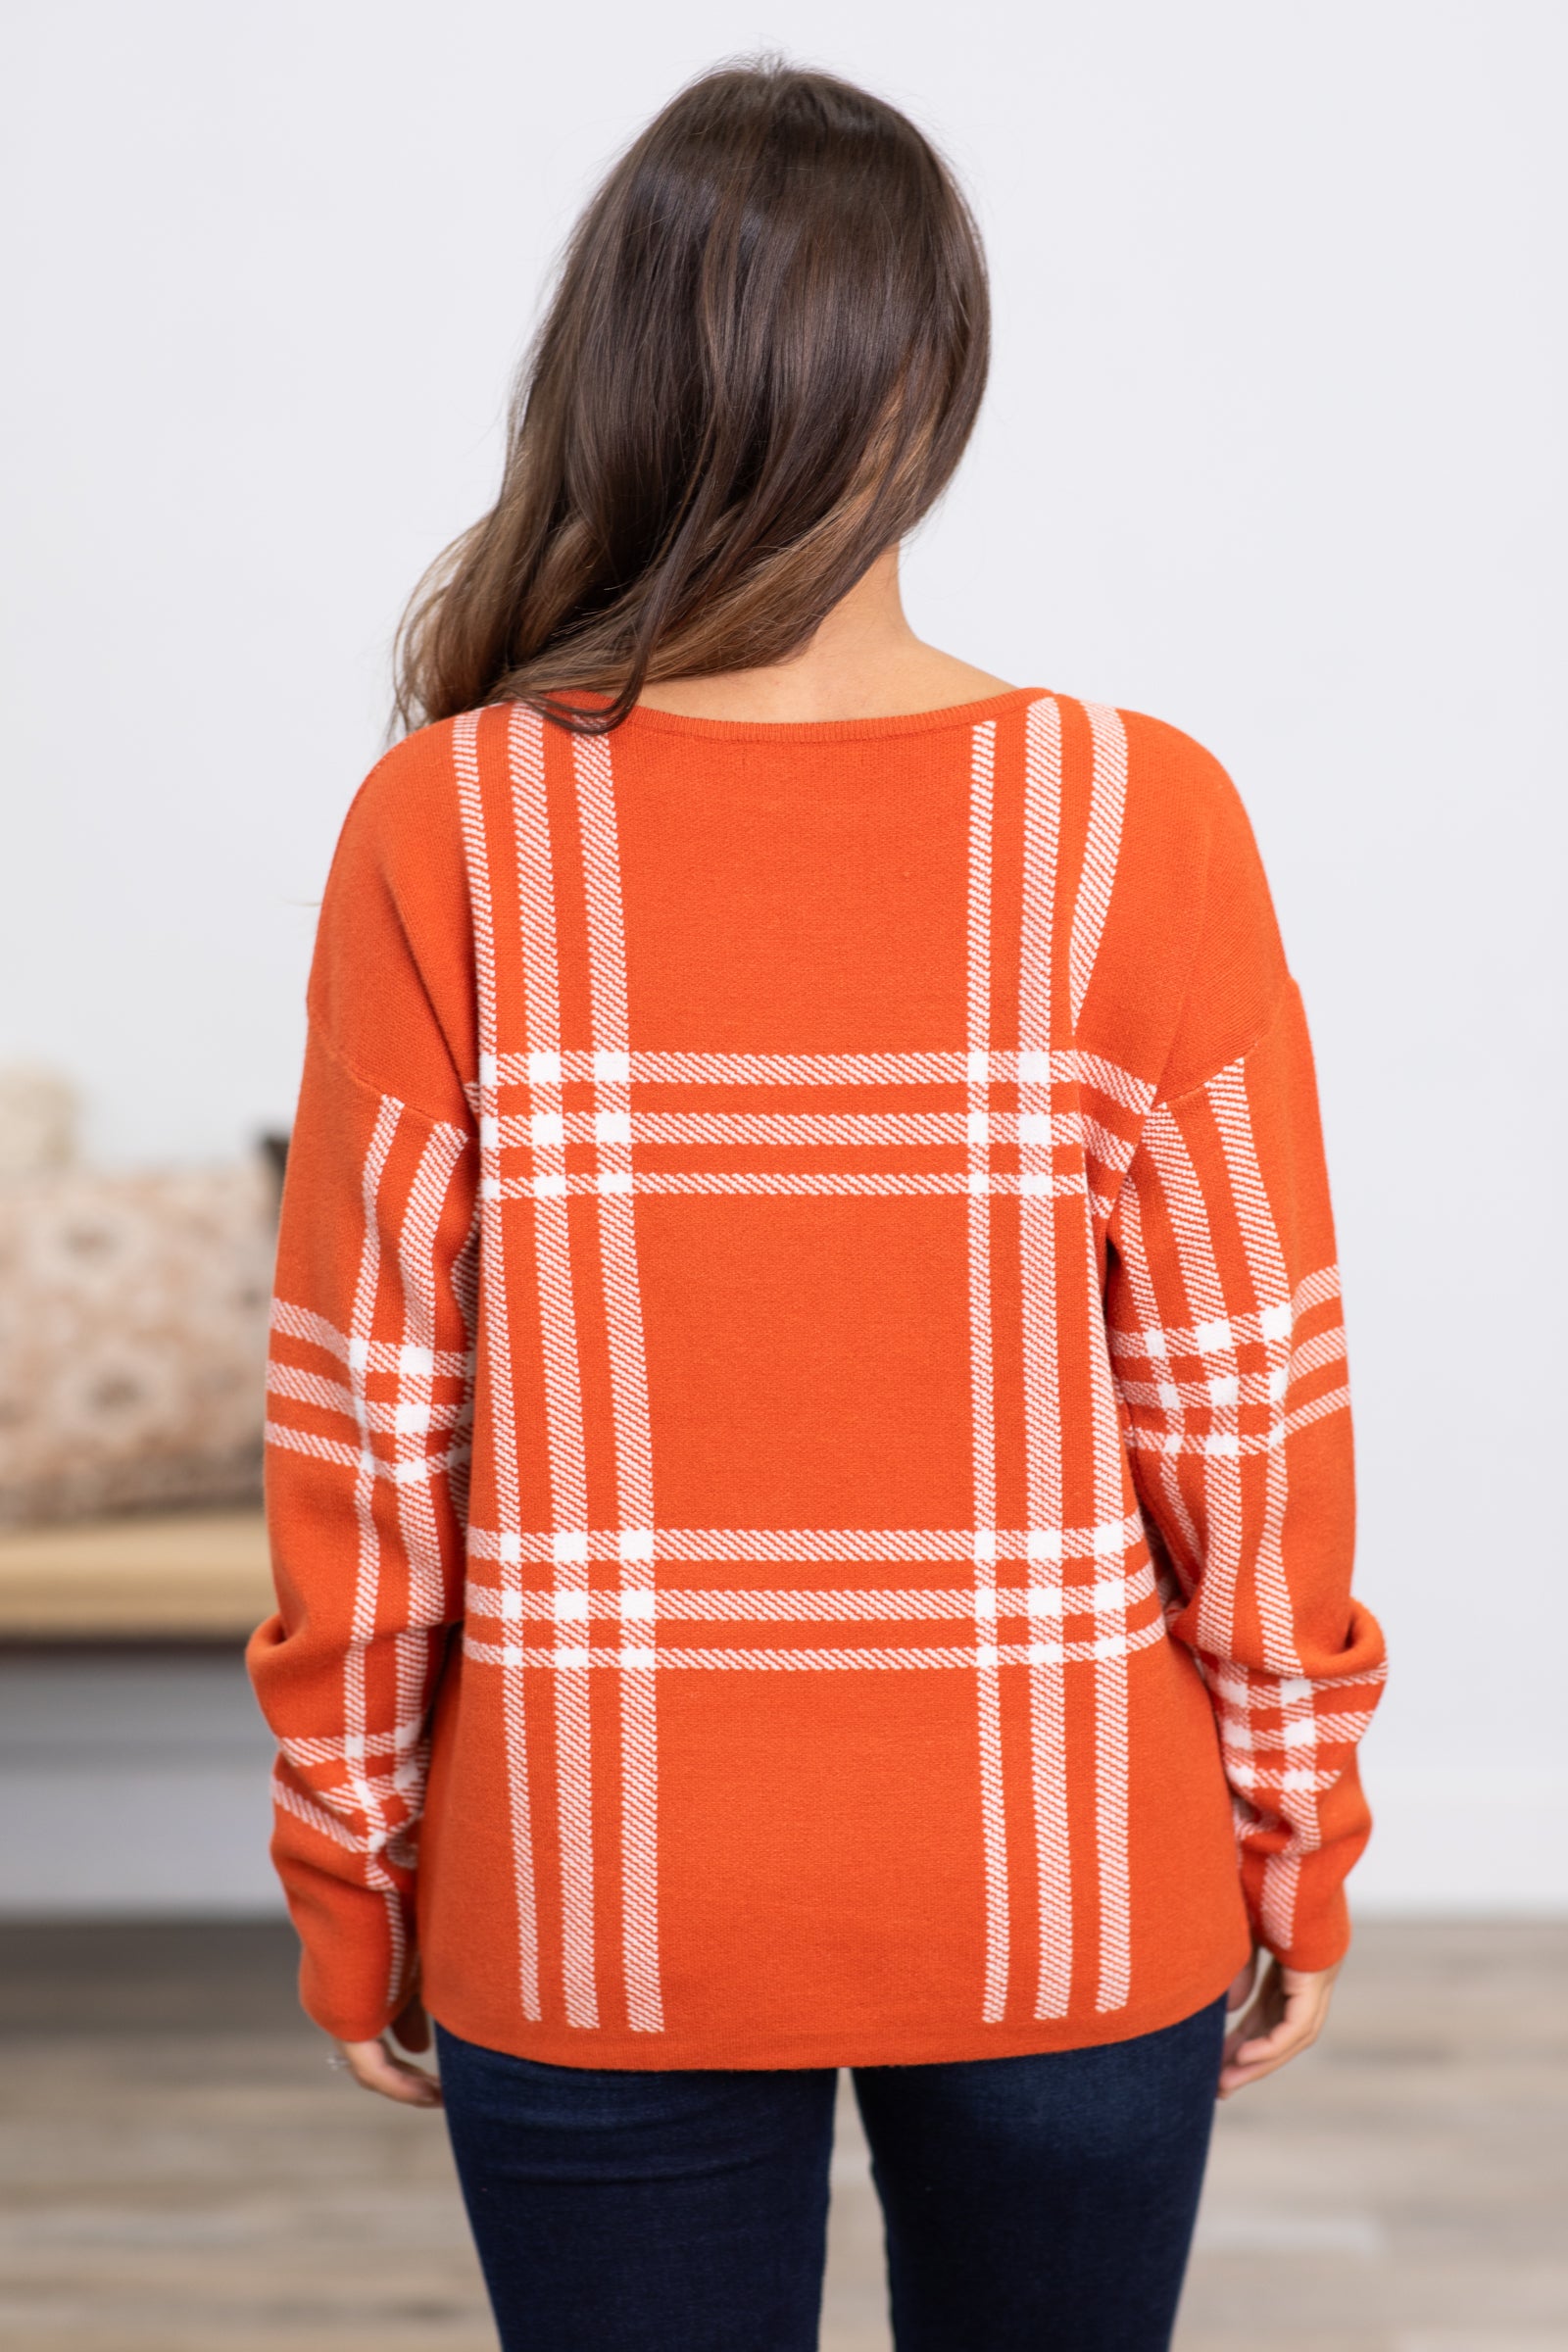 Orange and Off White Plaid Sweater